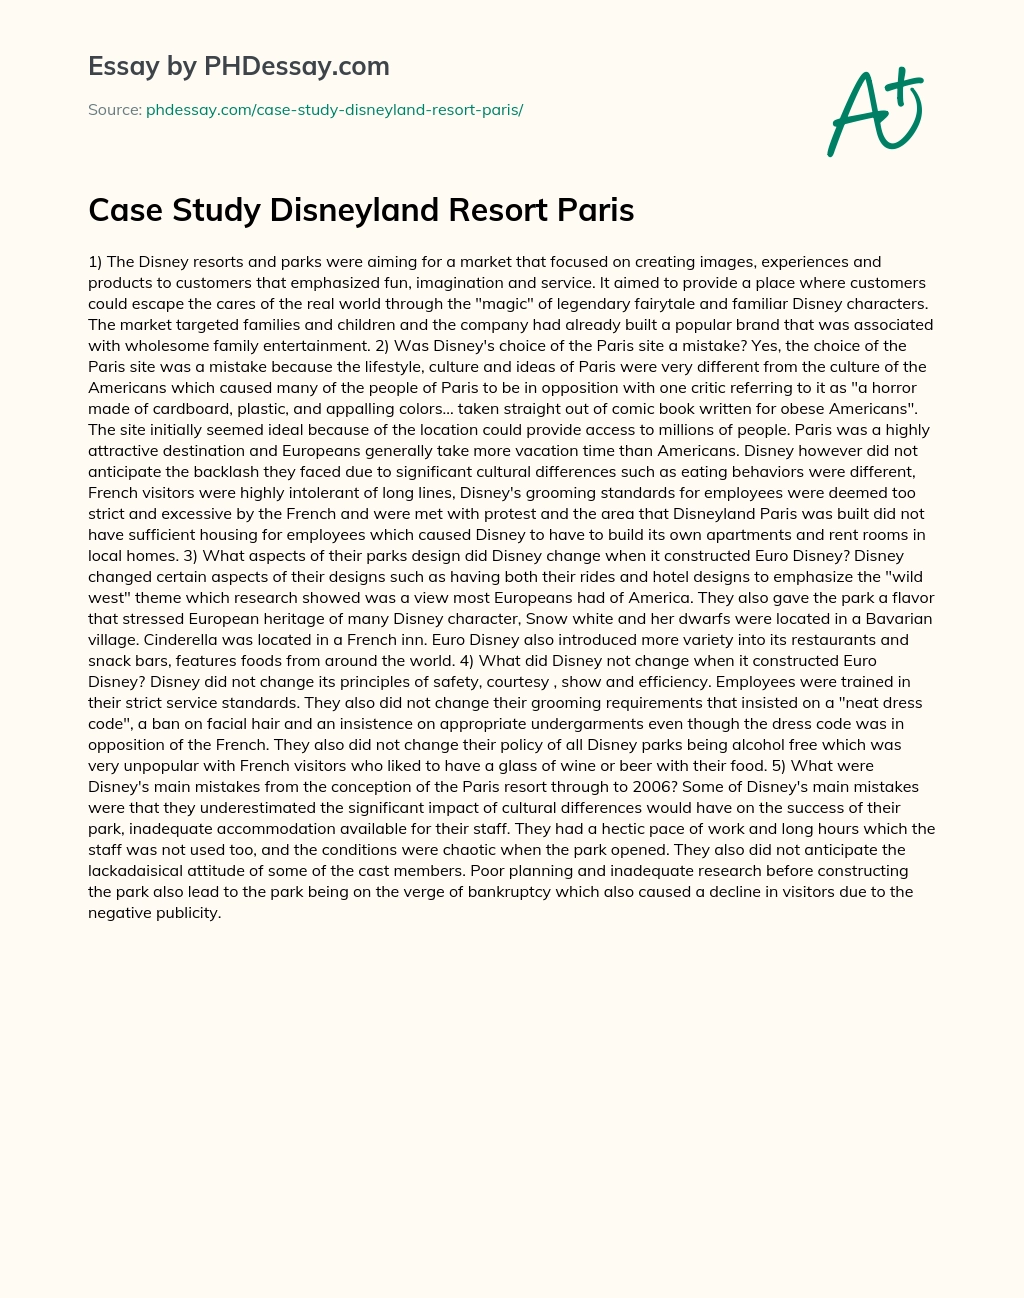 disneyland resort paris case study